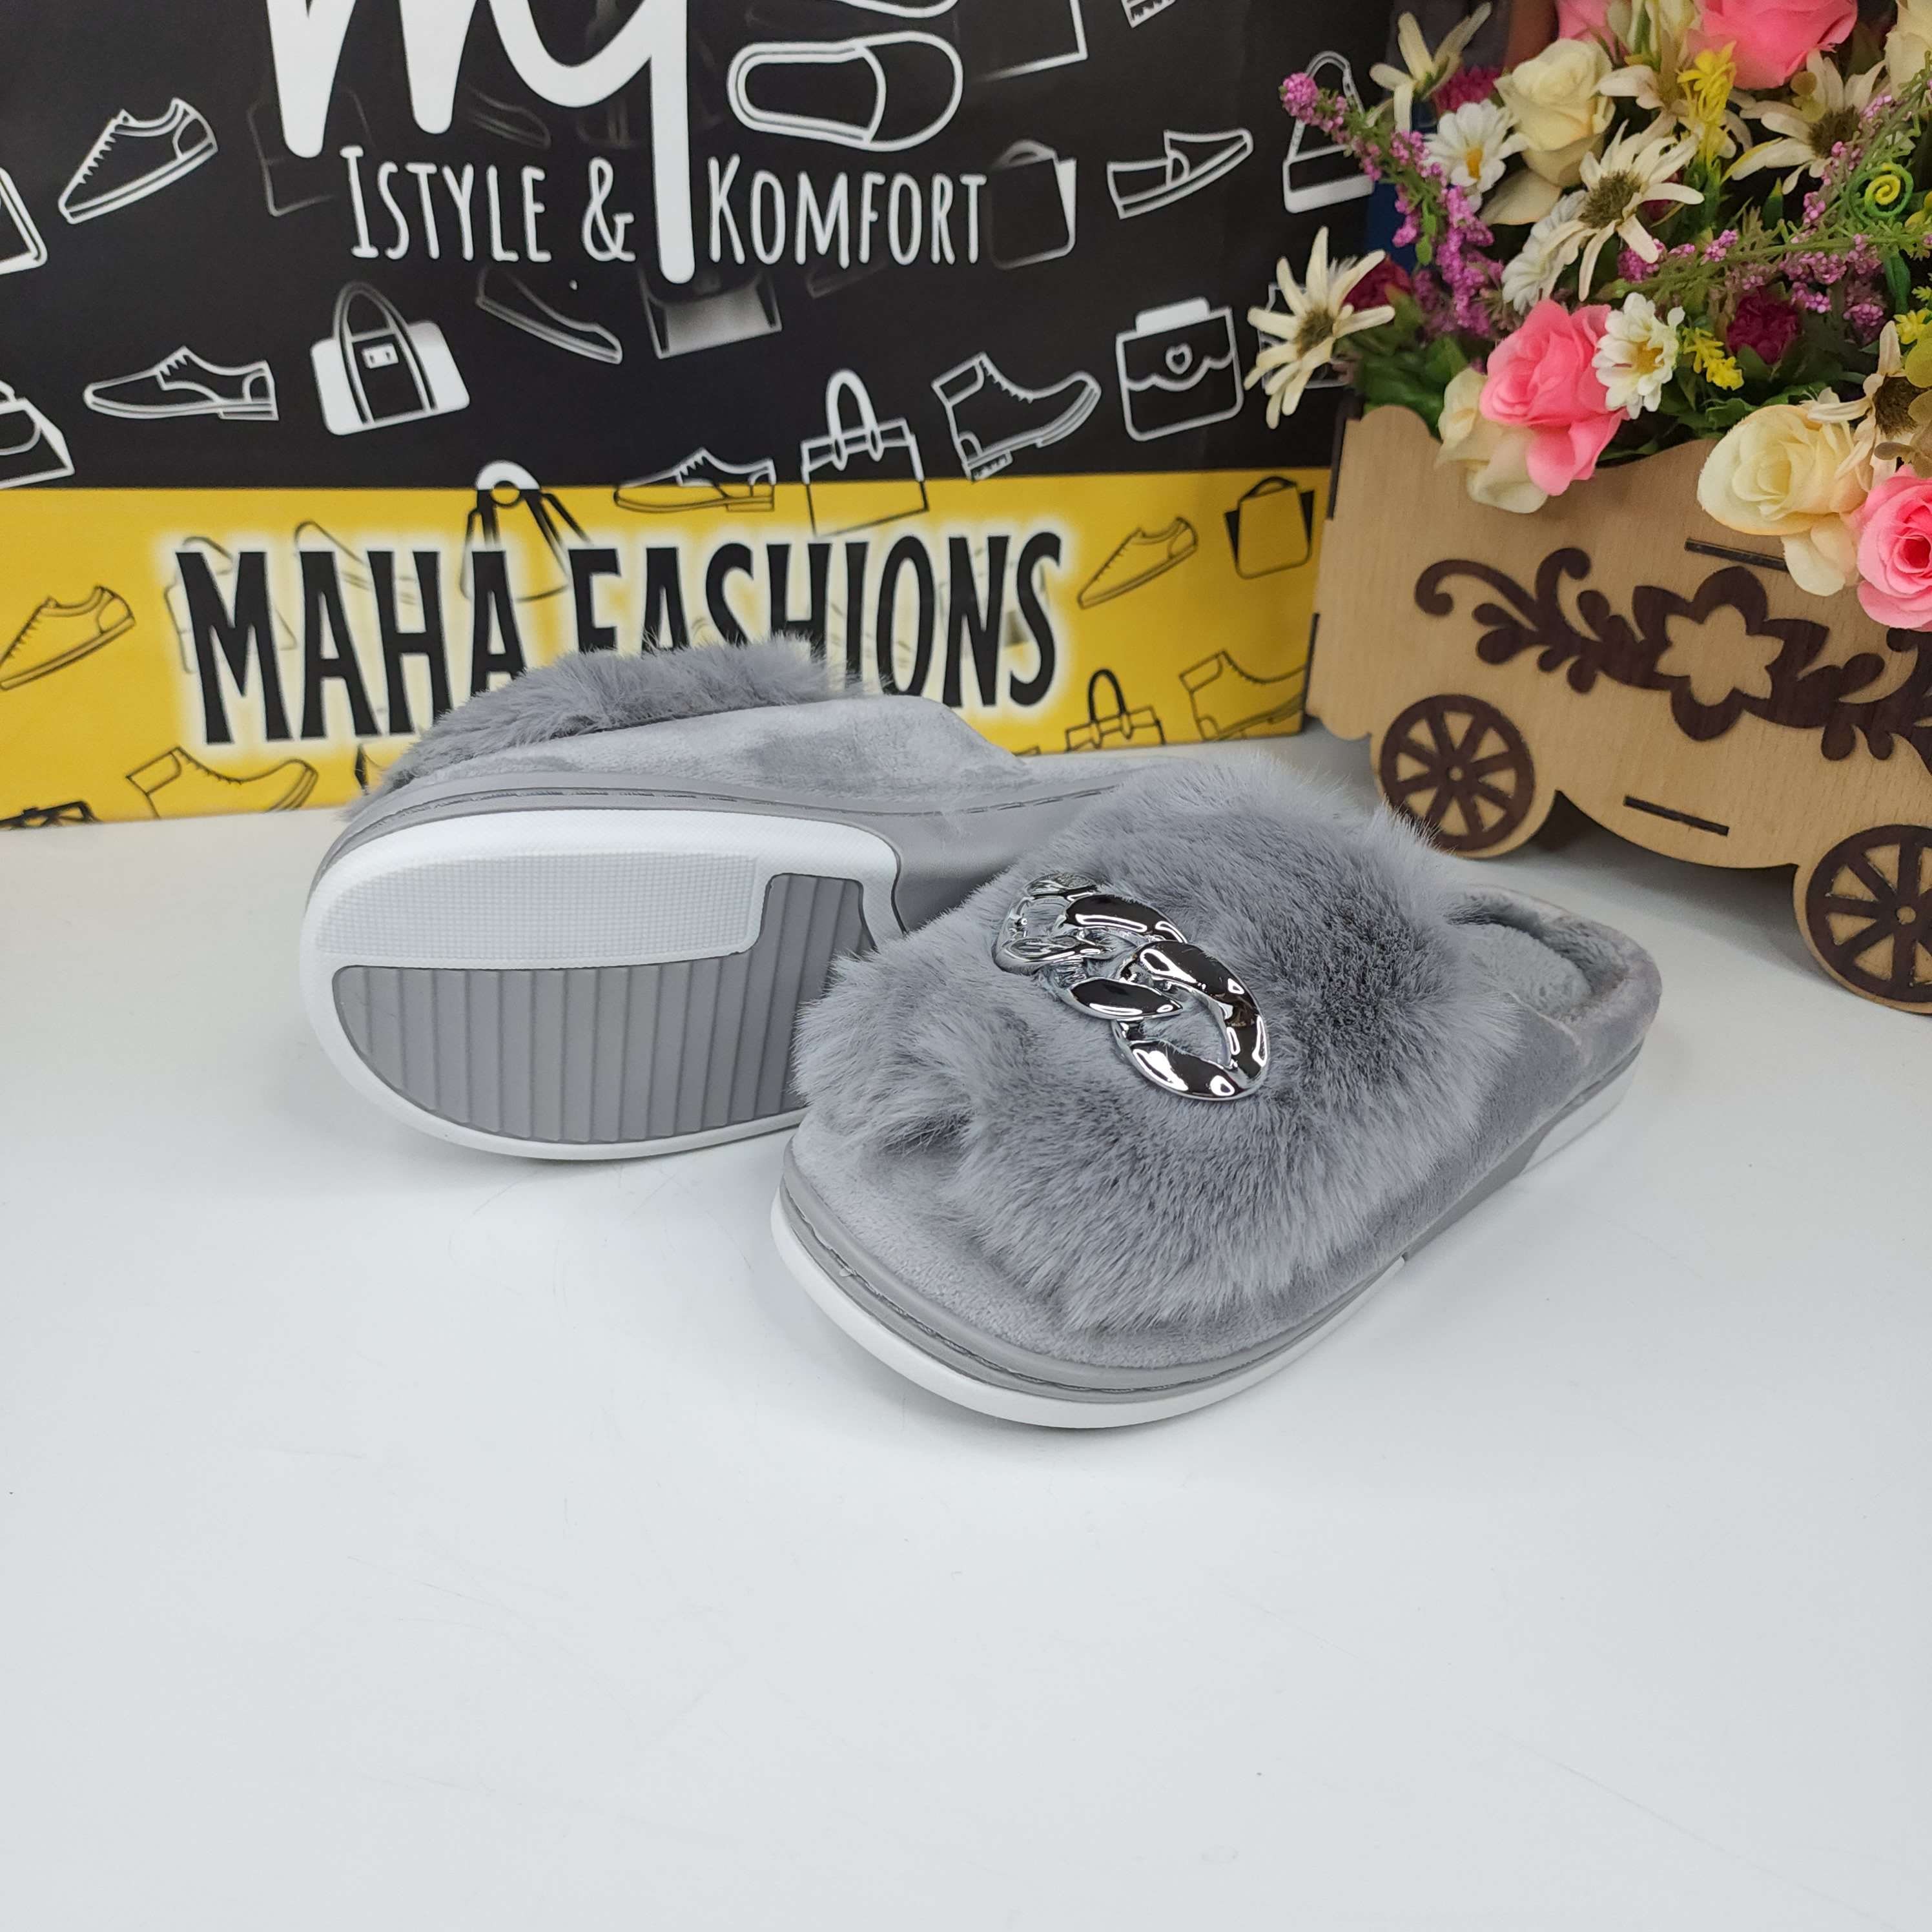 Grey Fur Mules - Maha fashions -  